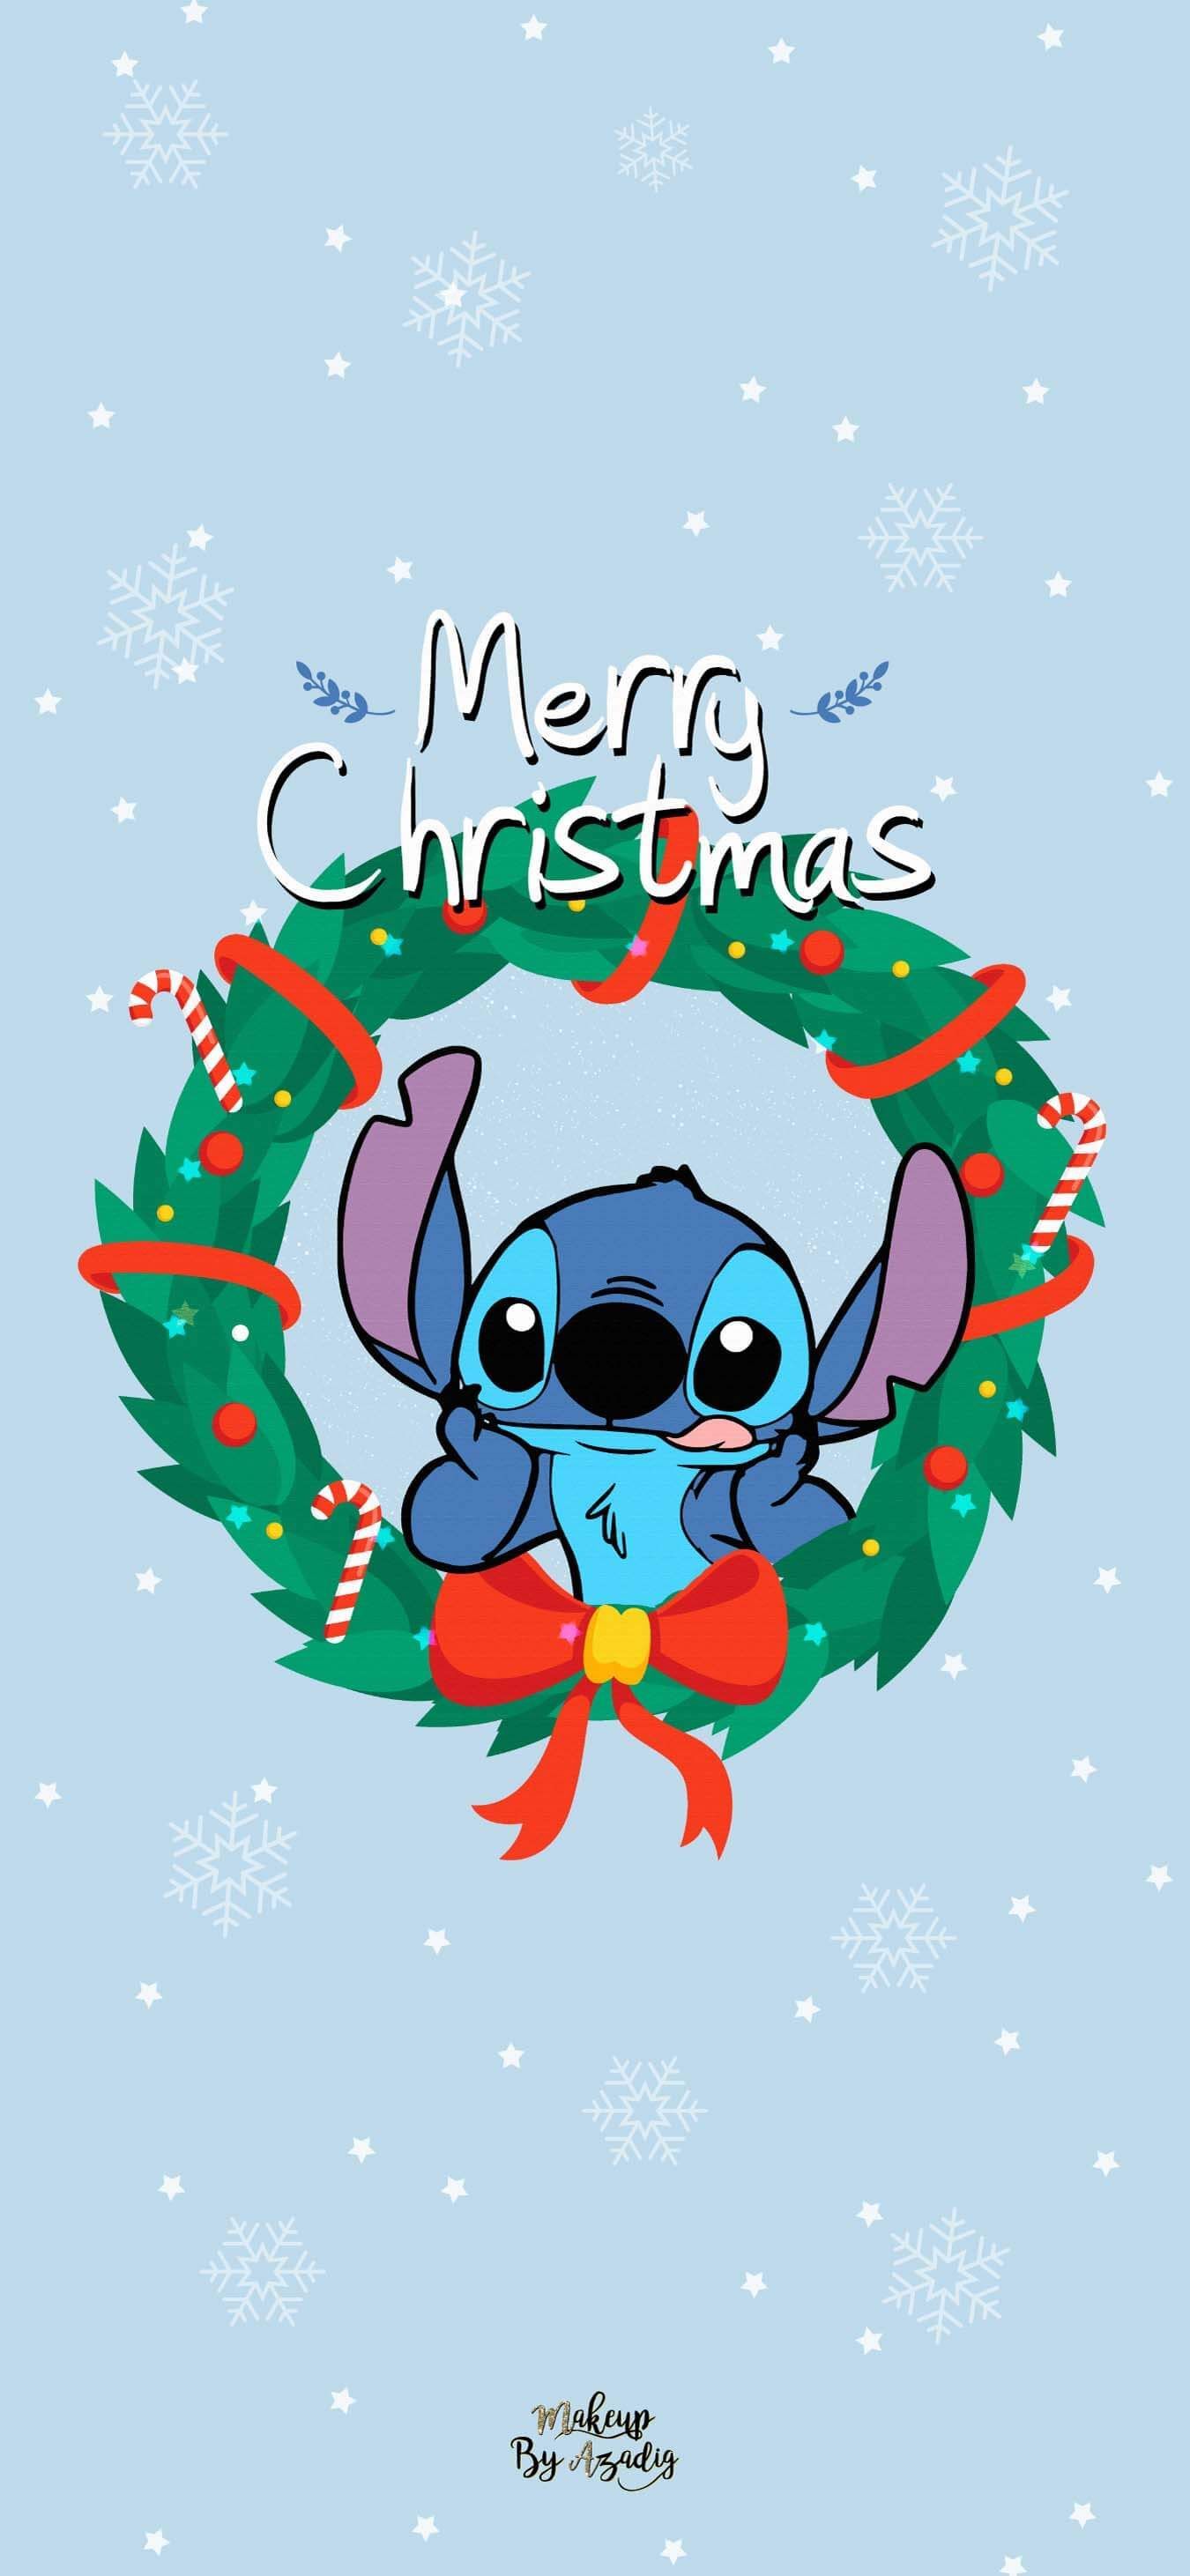 Stitch merry christmas wallpaper by makeupbyregally - Christmas iPhone, Disney, cute Christmas